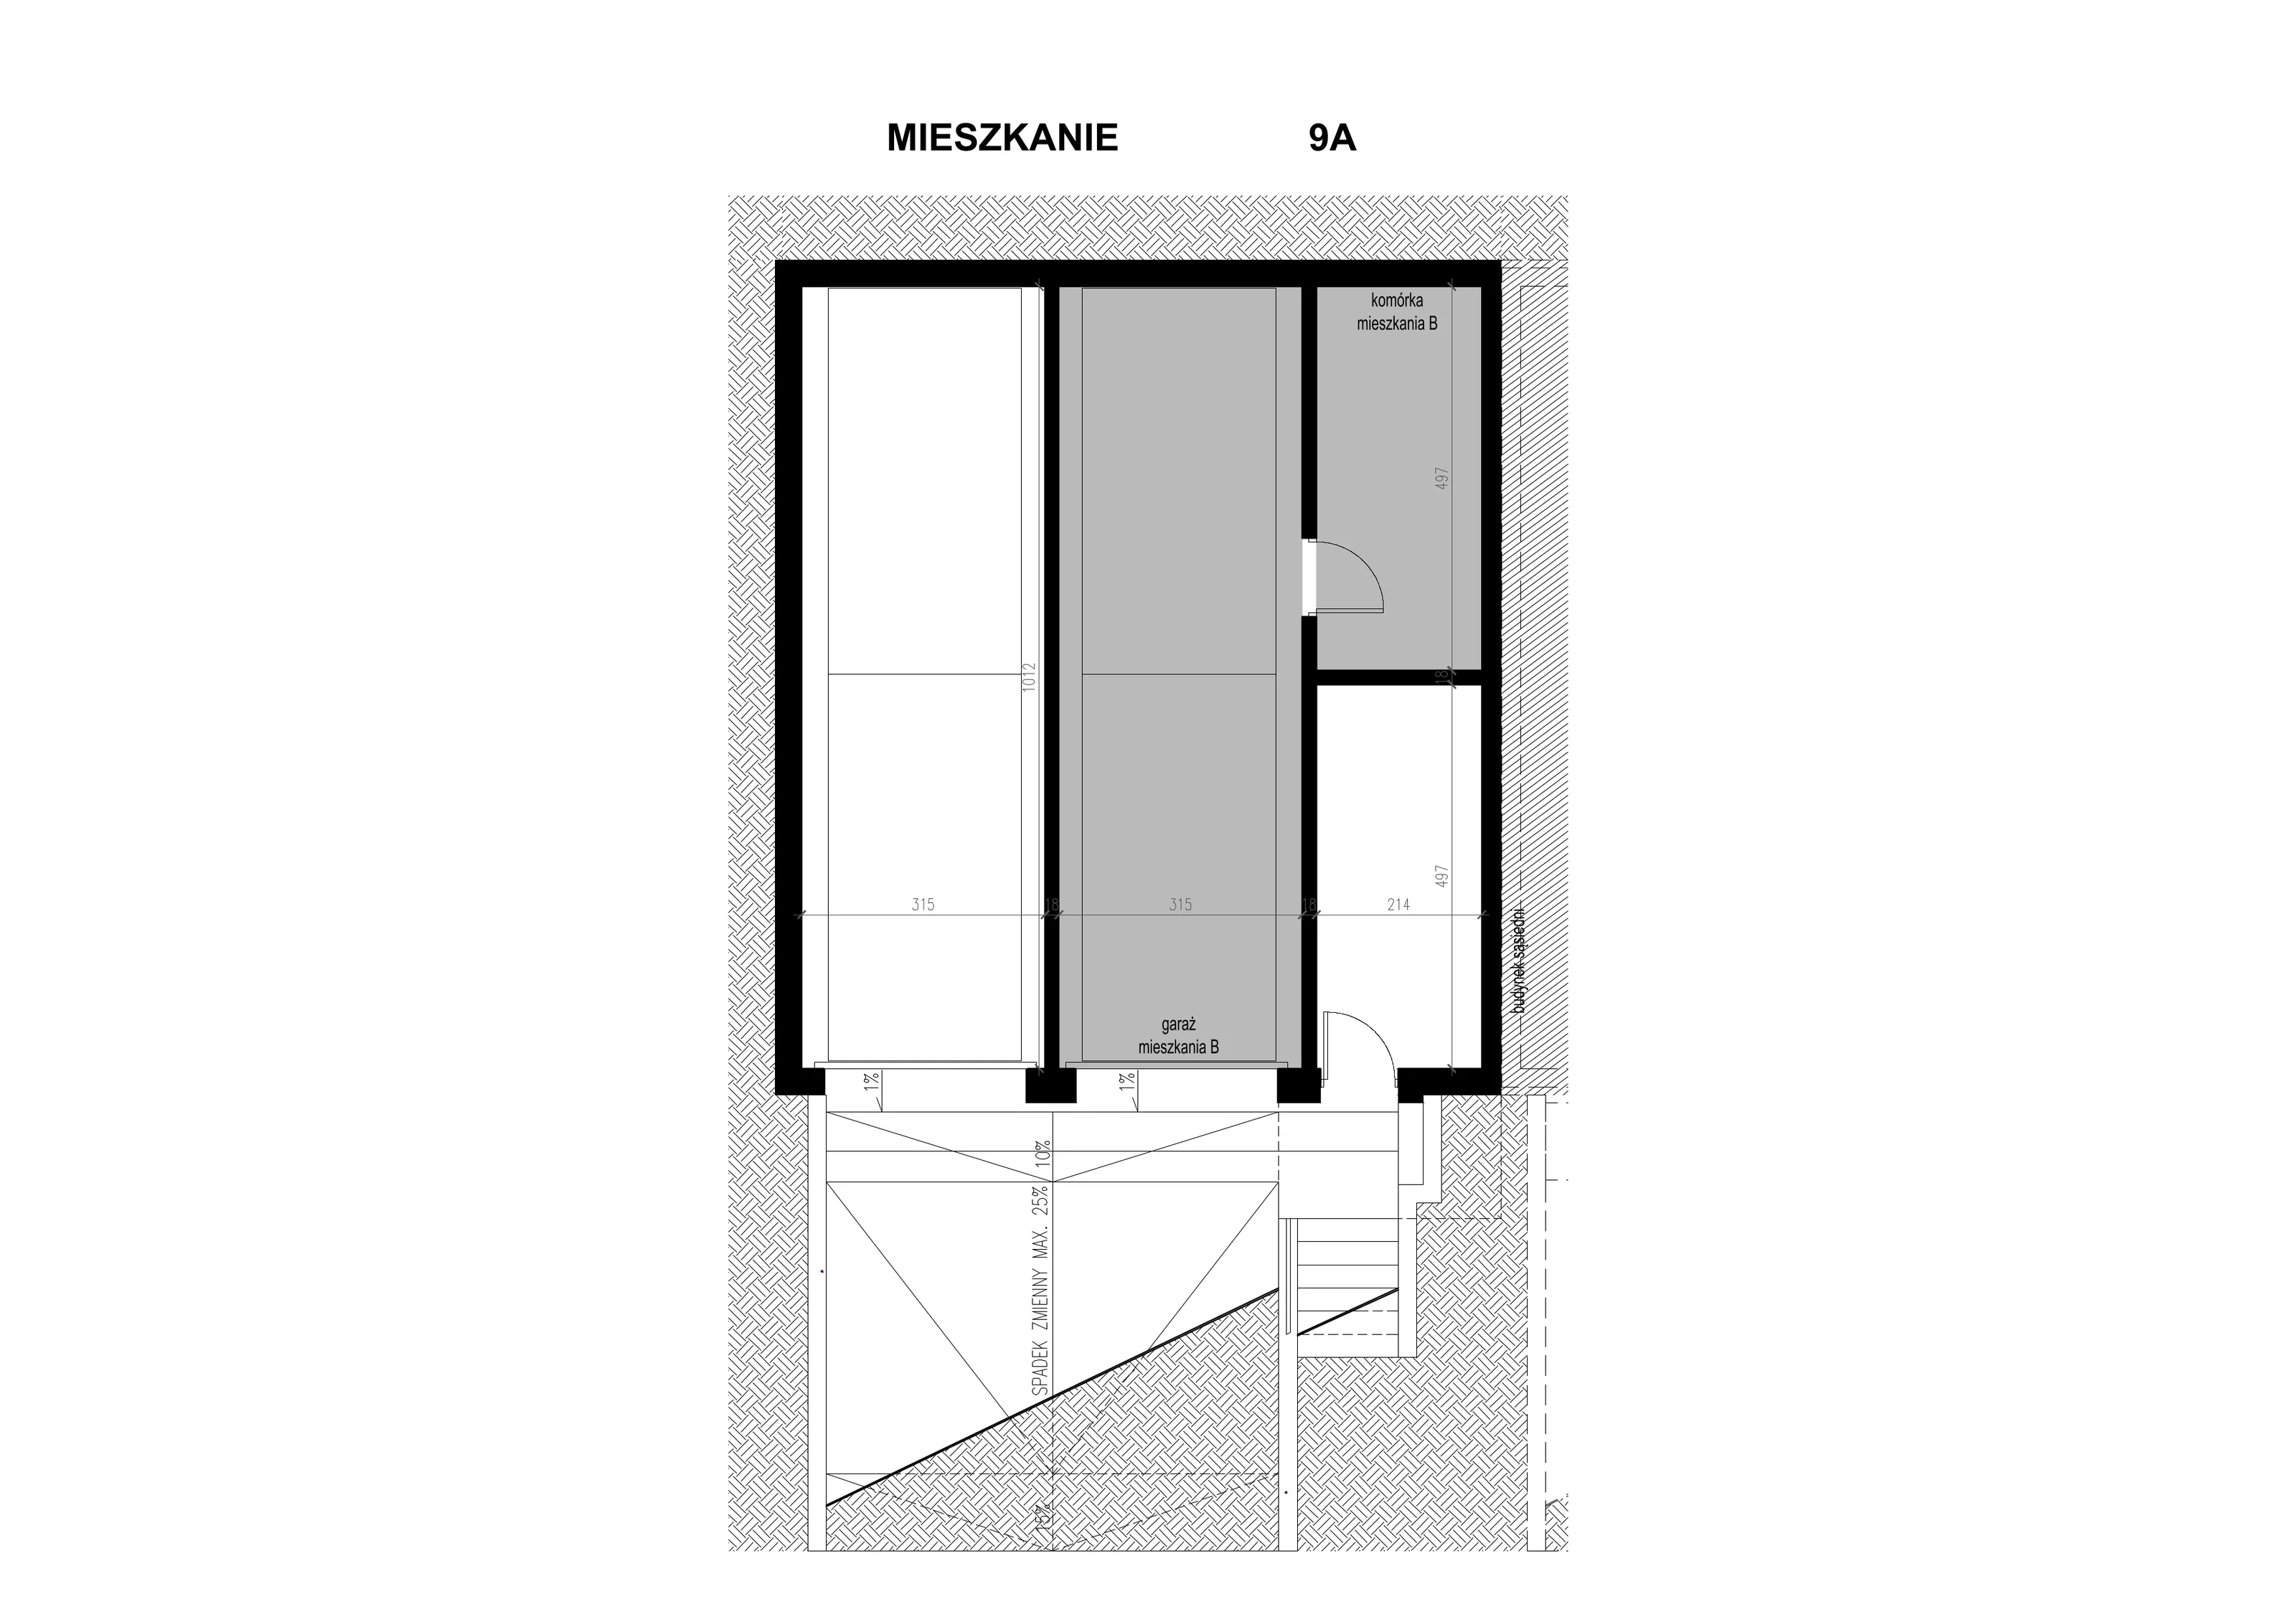 Apartament 80,15 m², parter, oferta nr 1.9A, Osiedle BO, Wrocław, Kowale, ul. Bociana